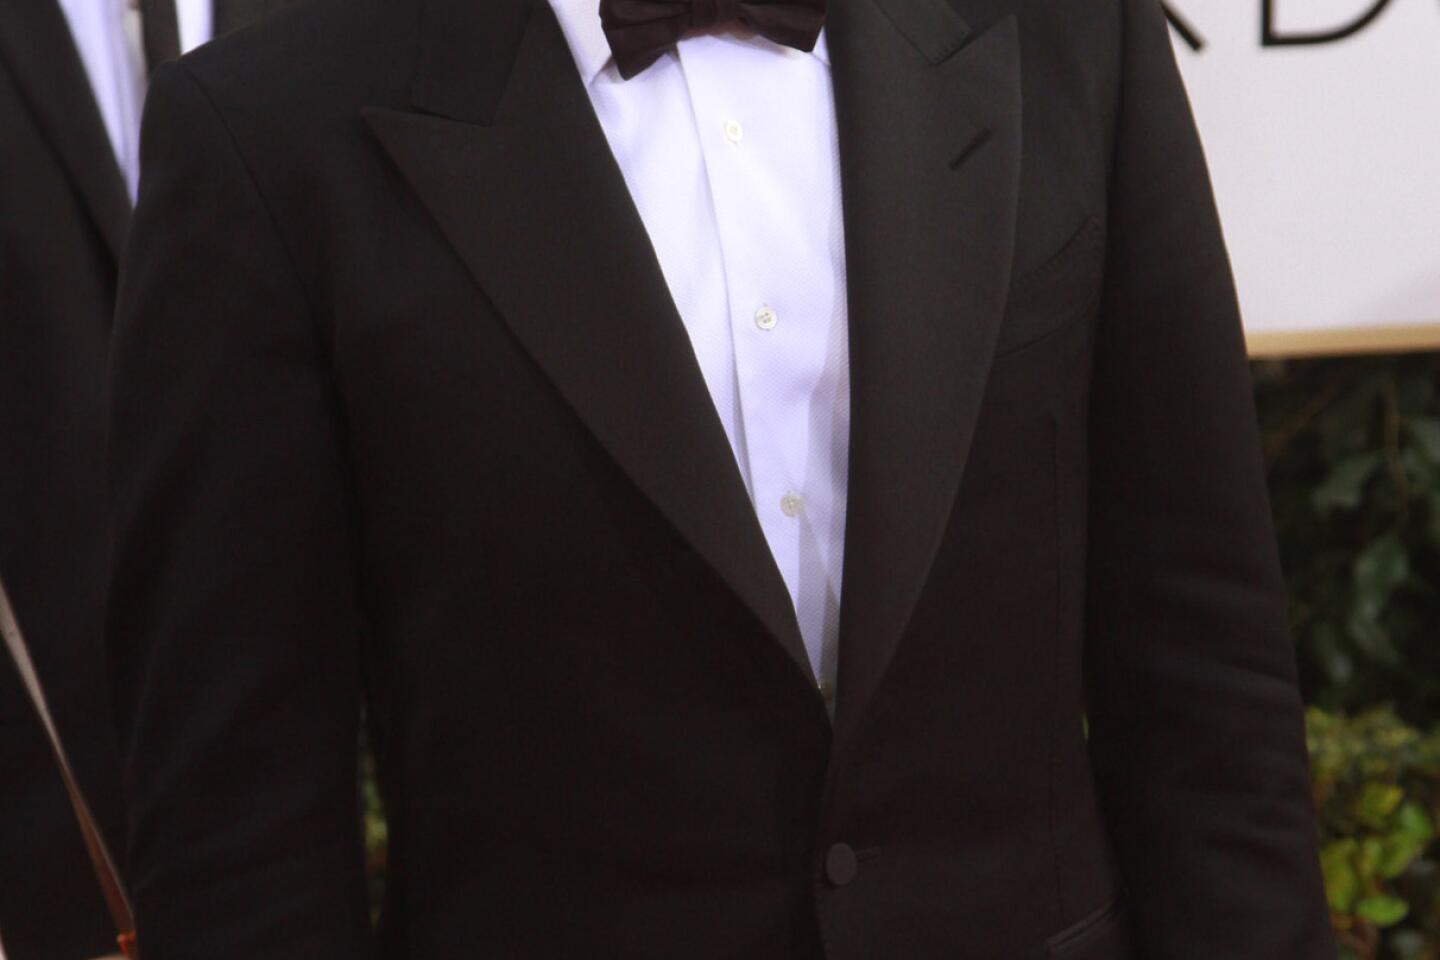 TOM FORD - Bradley Cooper wore a grey TOM FORD peak lapel suit